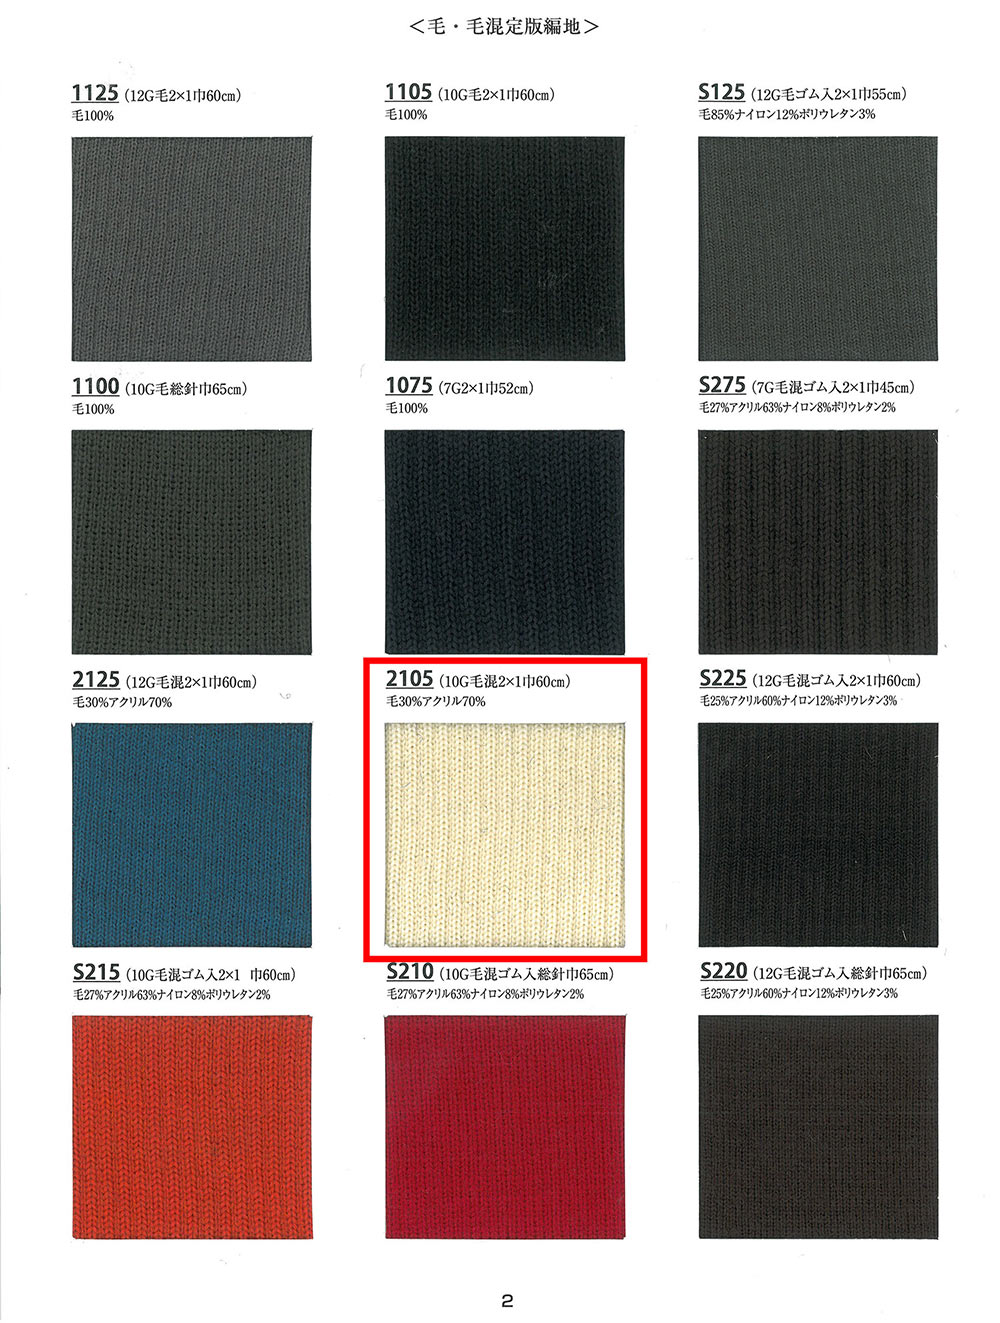 2105 Rib Knit 10G Wool Blend 2x1